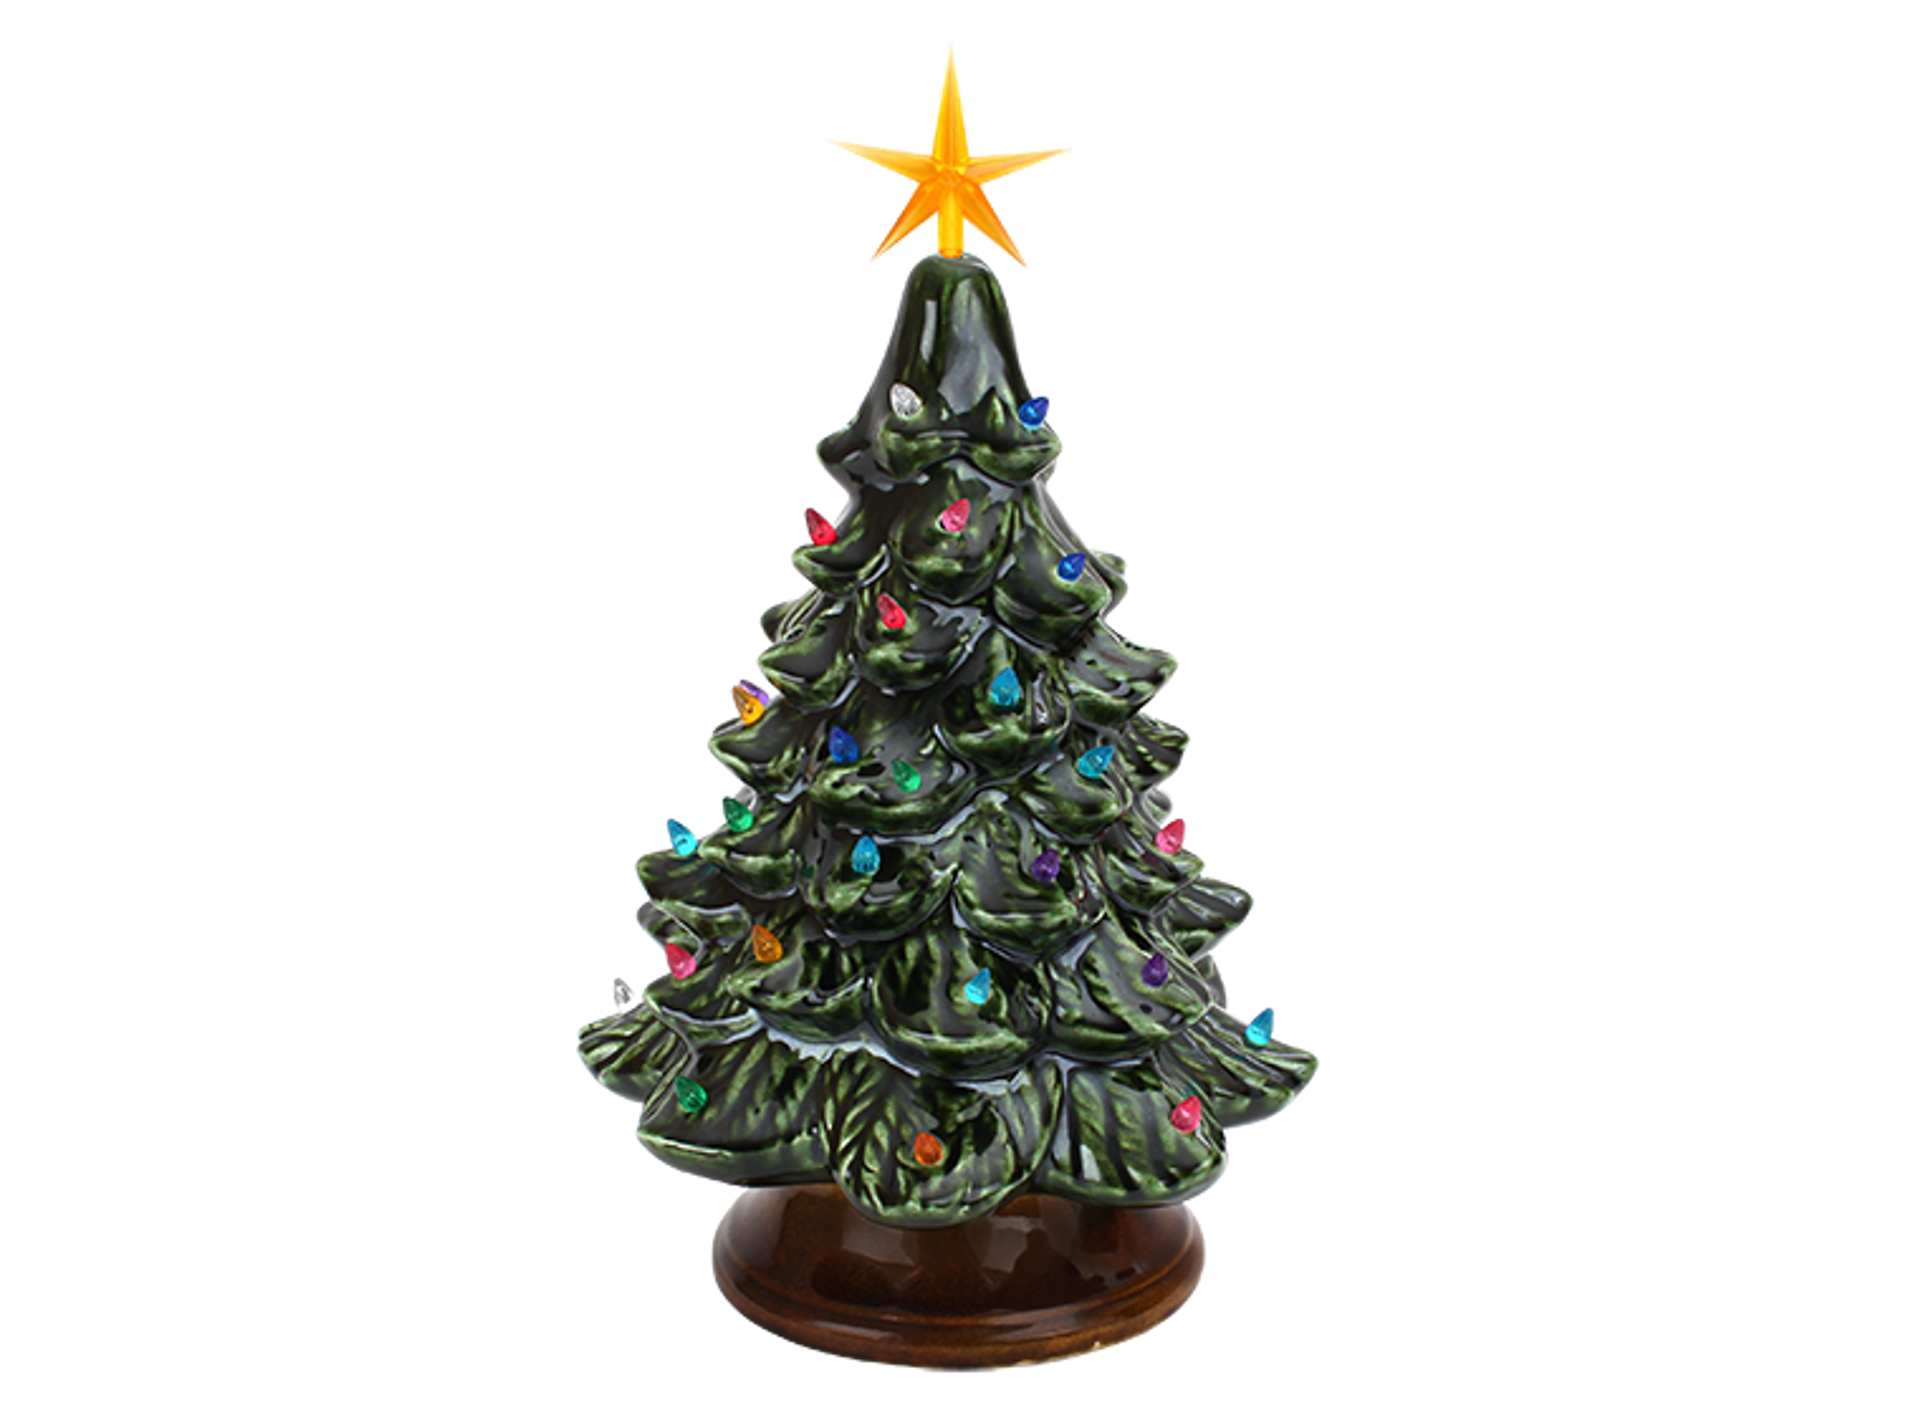 PRE-ORDER - Lighted Christmas Tree